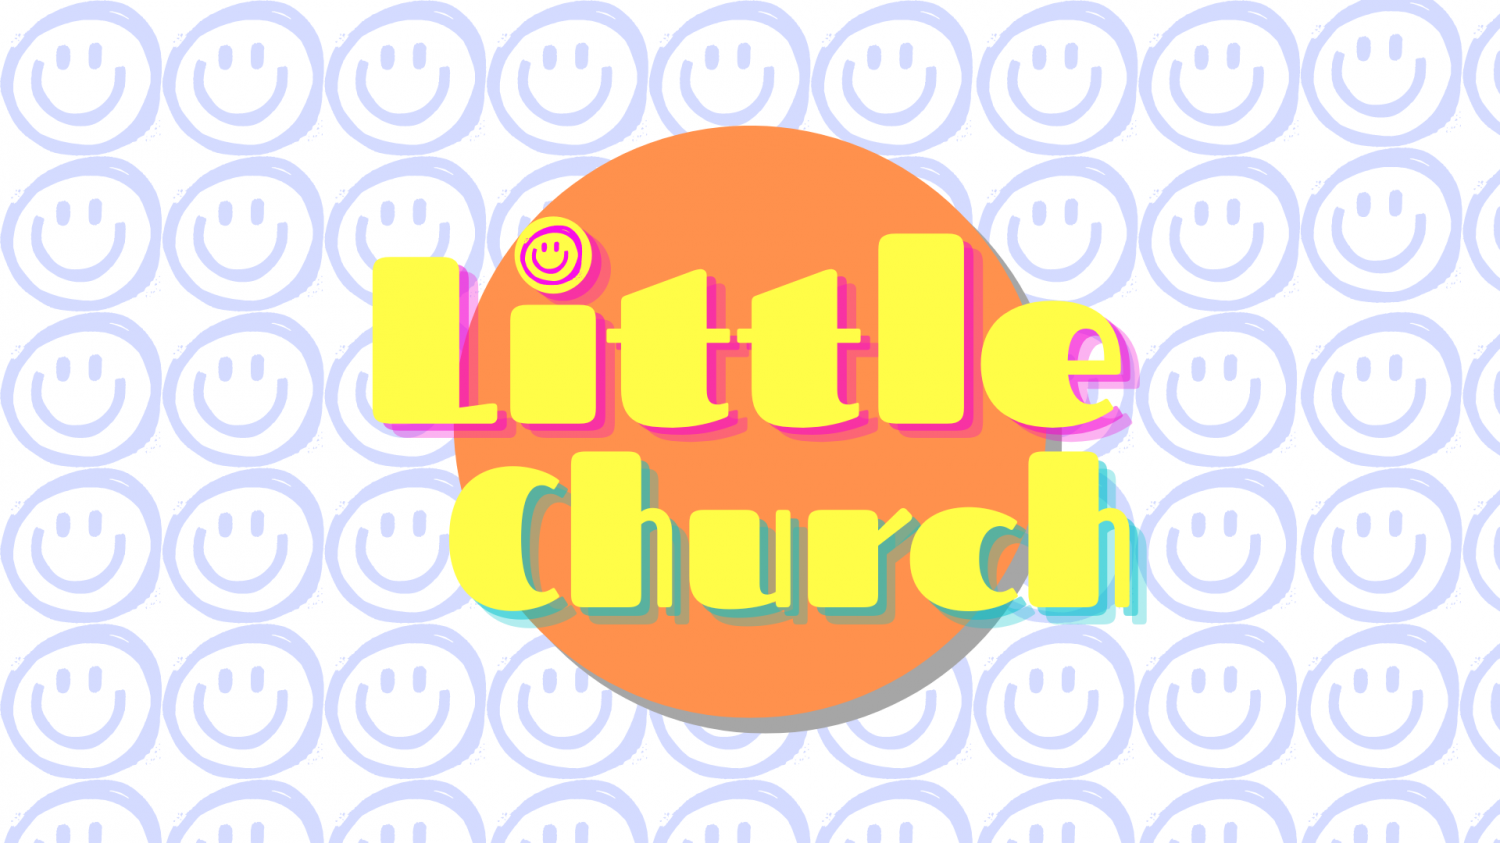 Little Church logo.